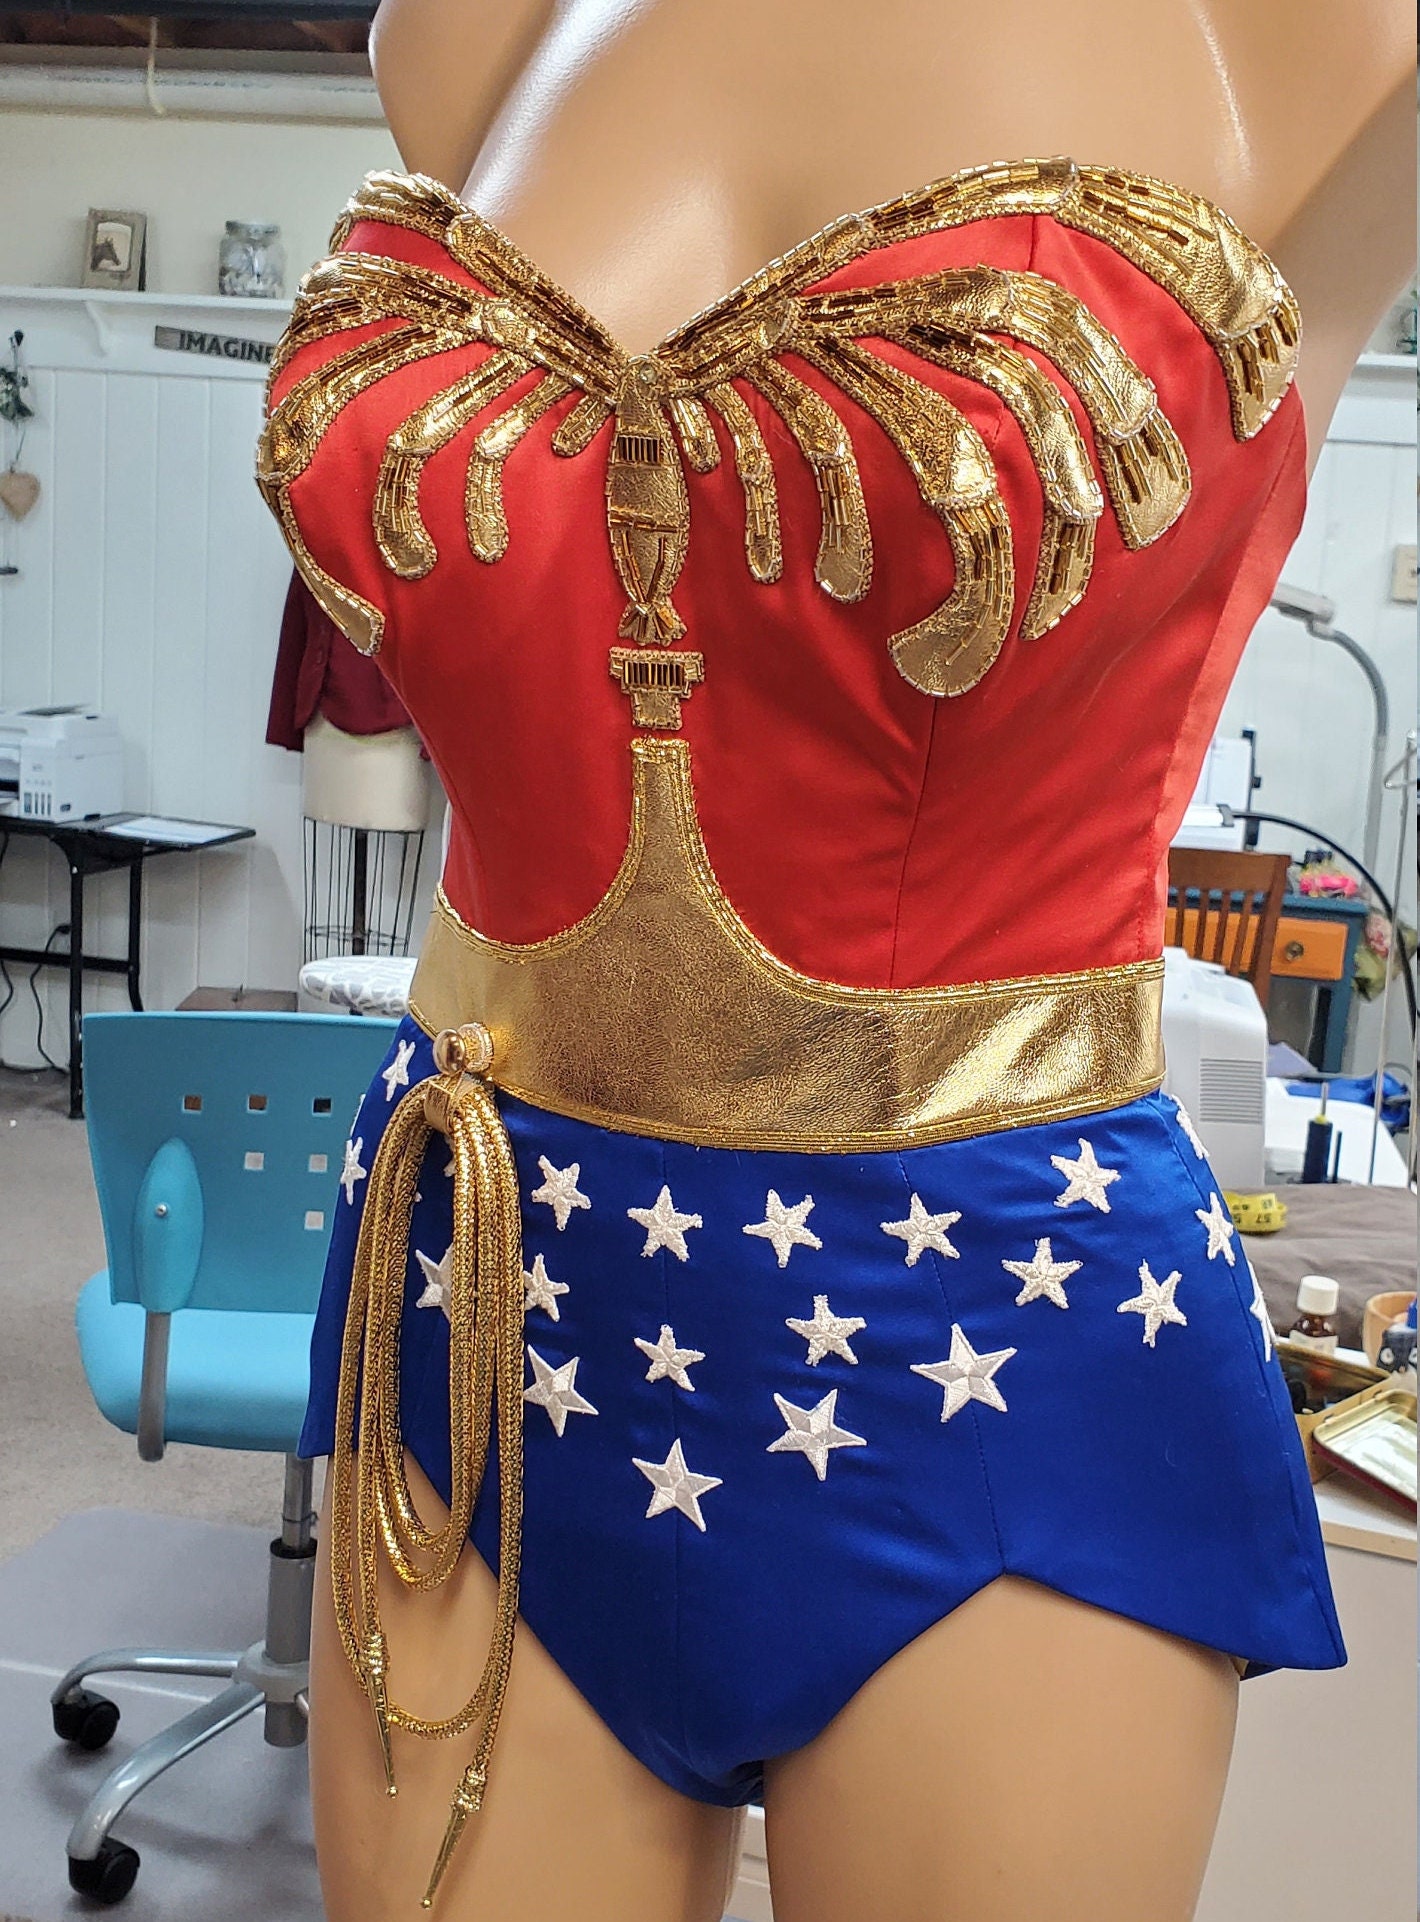 Full Classic Lynda Carter Season 2 Wonder Woman Costume: Emblem Corset Belt  Tiara Cuffs and Your Choice of Bottoms WITH Cape , wonder woman costume 